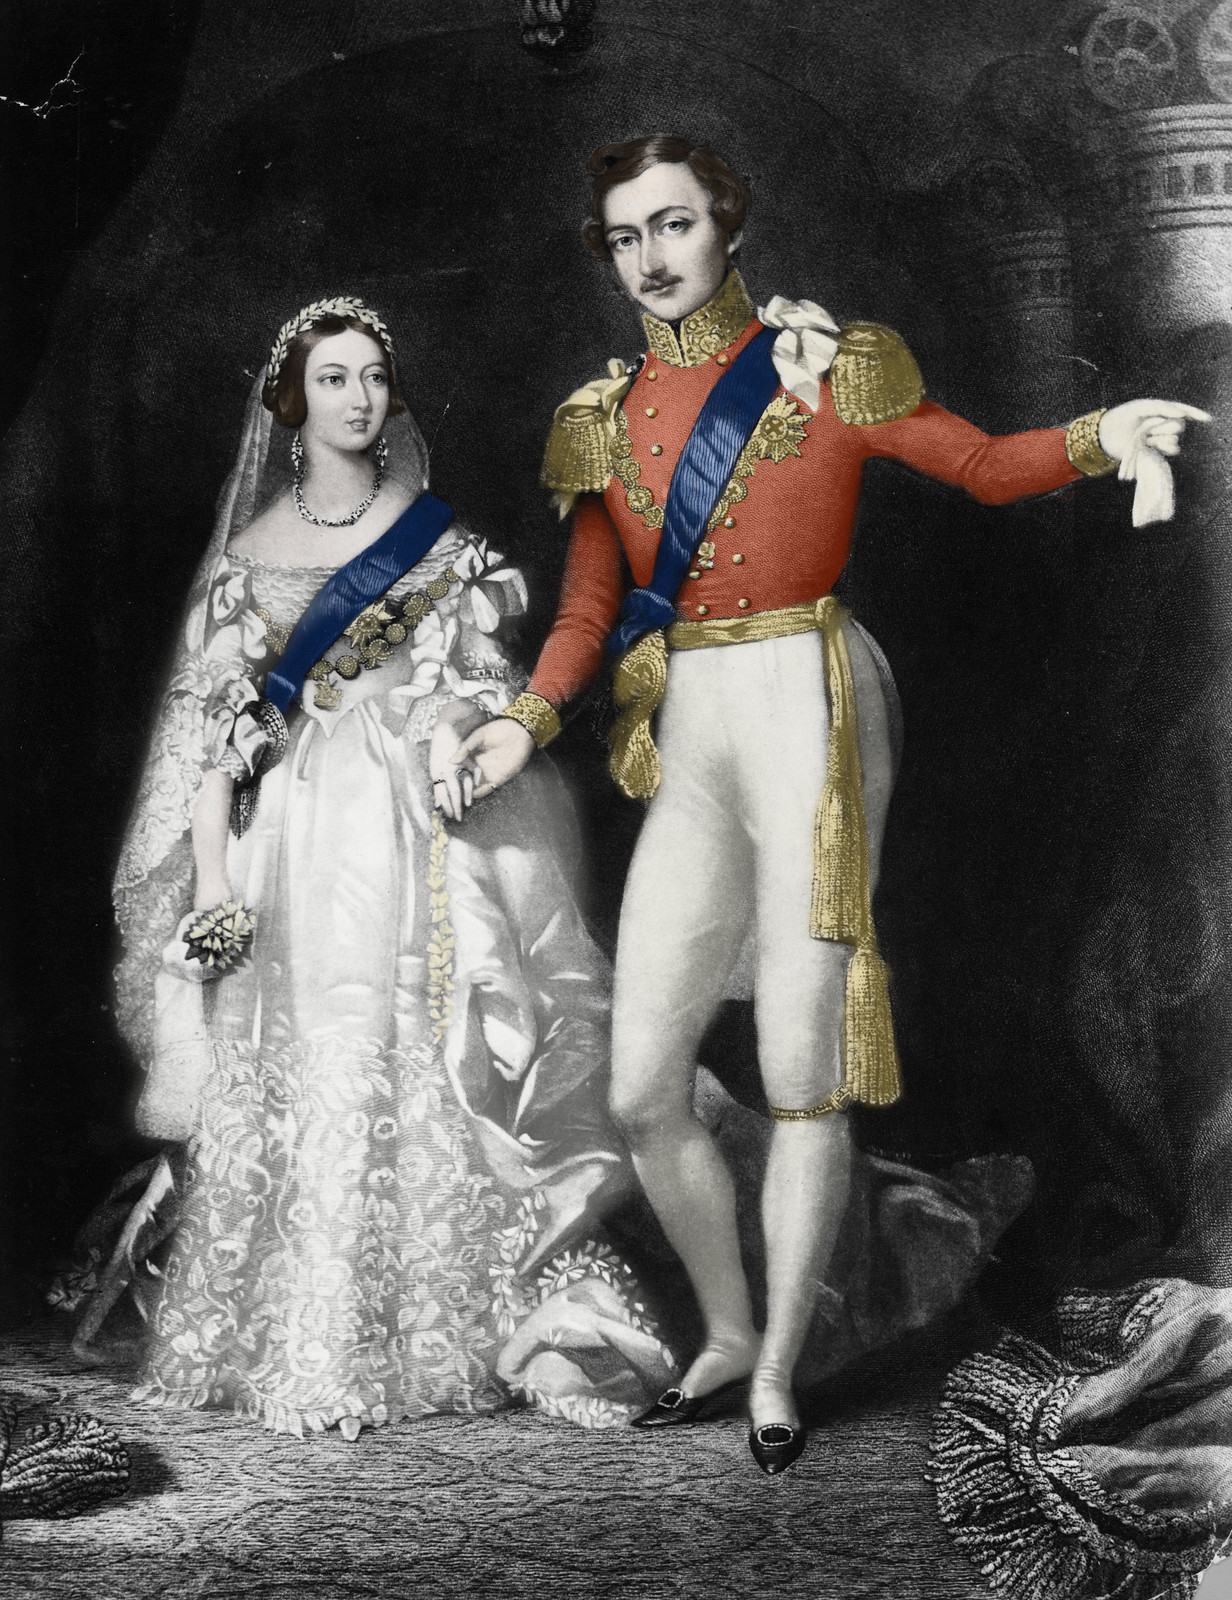 Wedding of Queen Victoria and Prince Albert